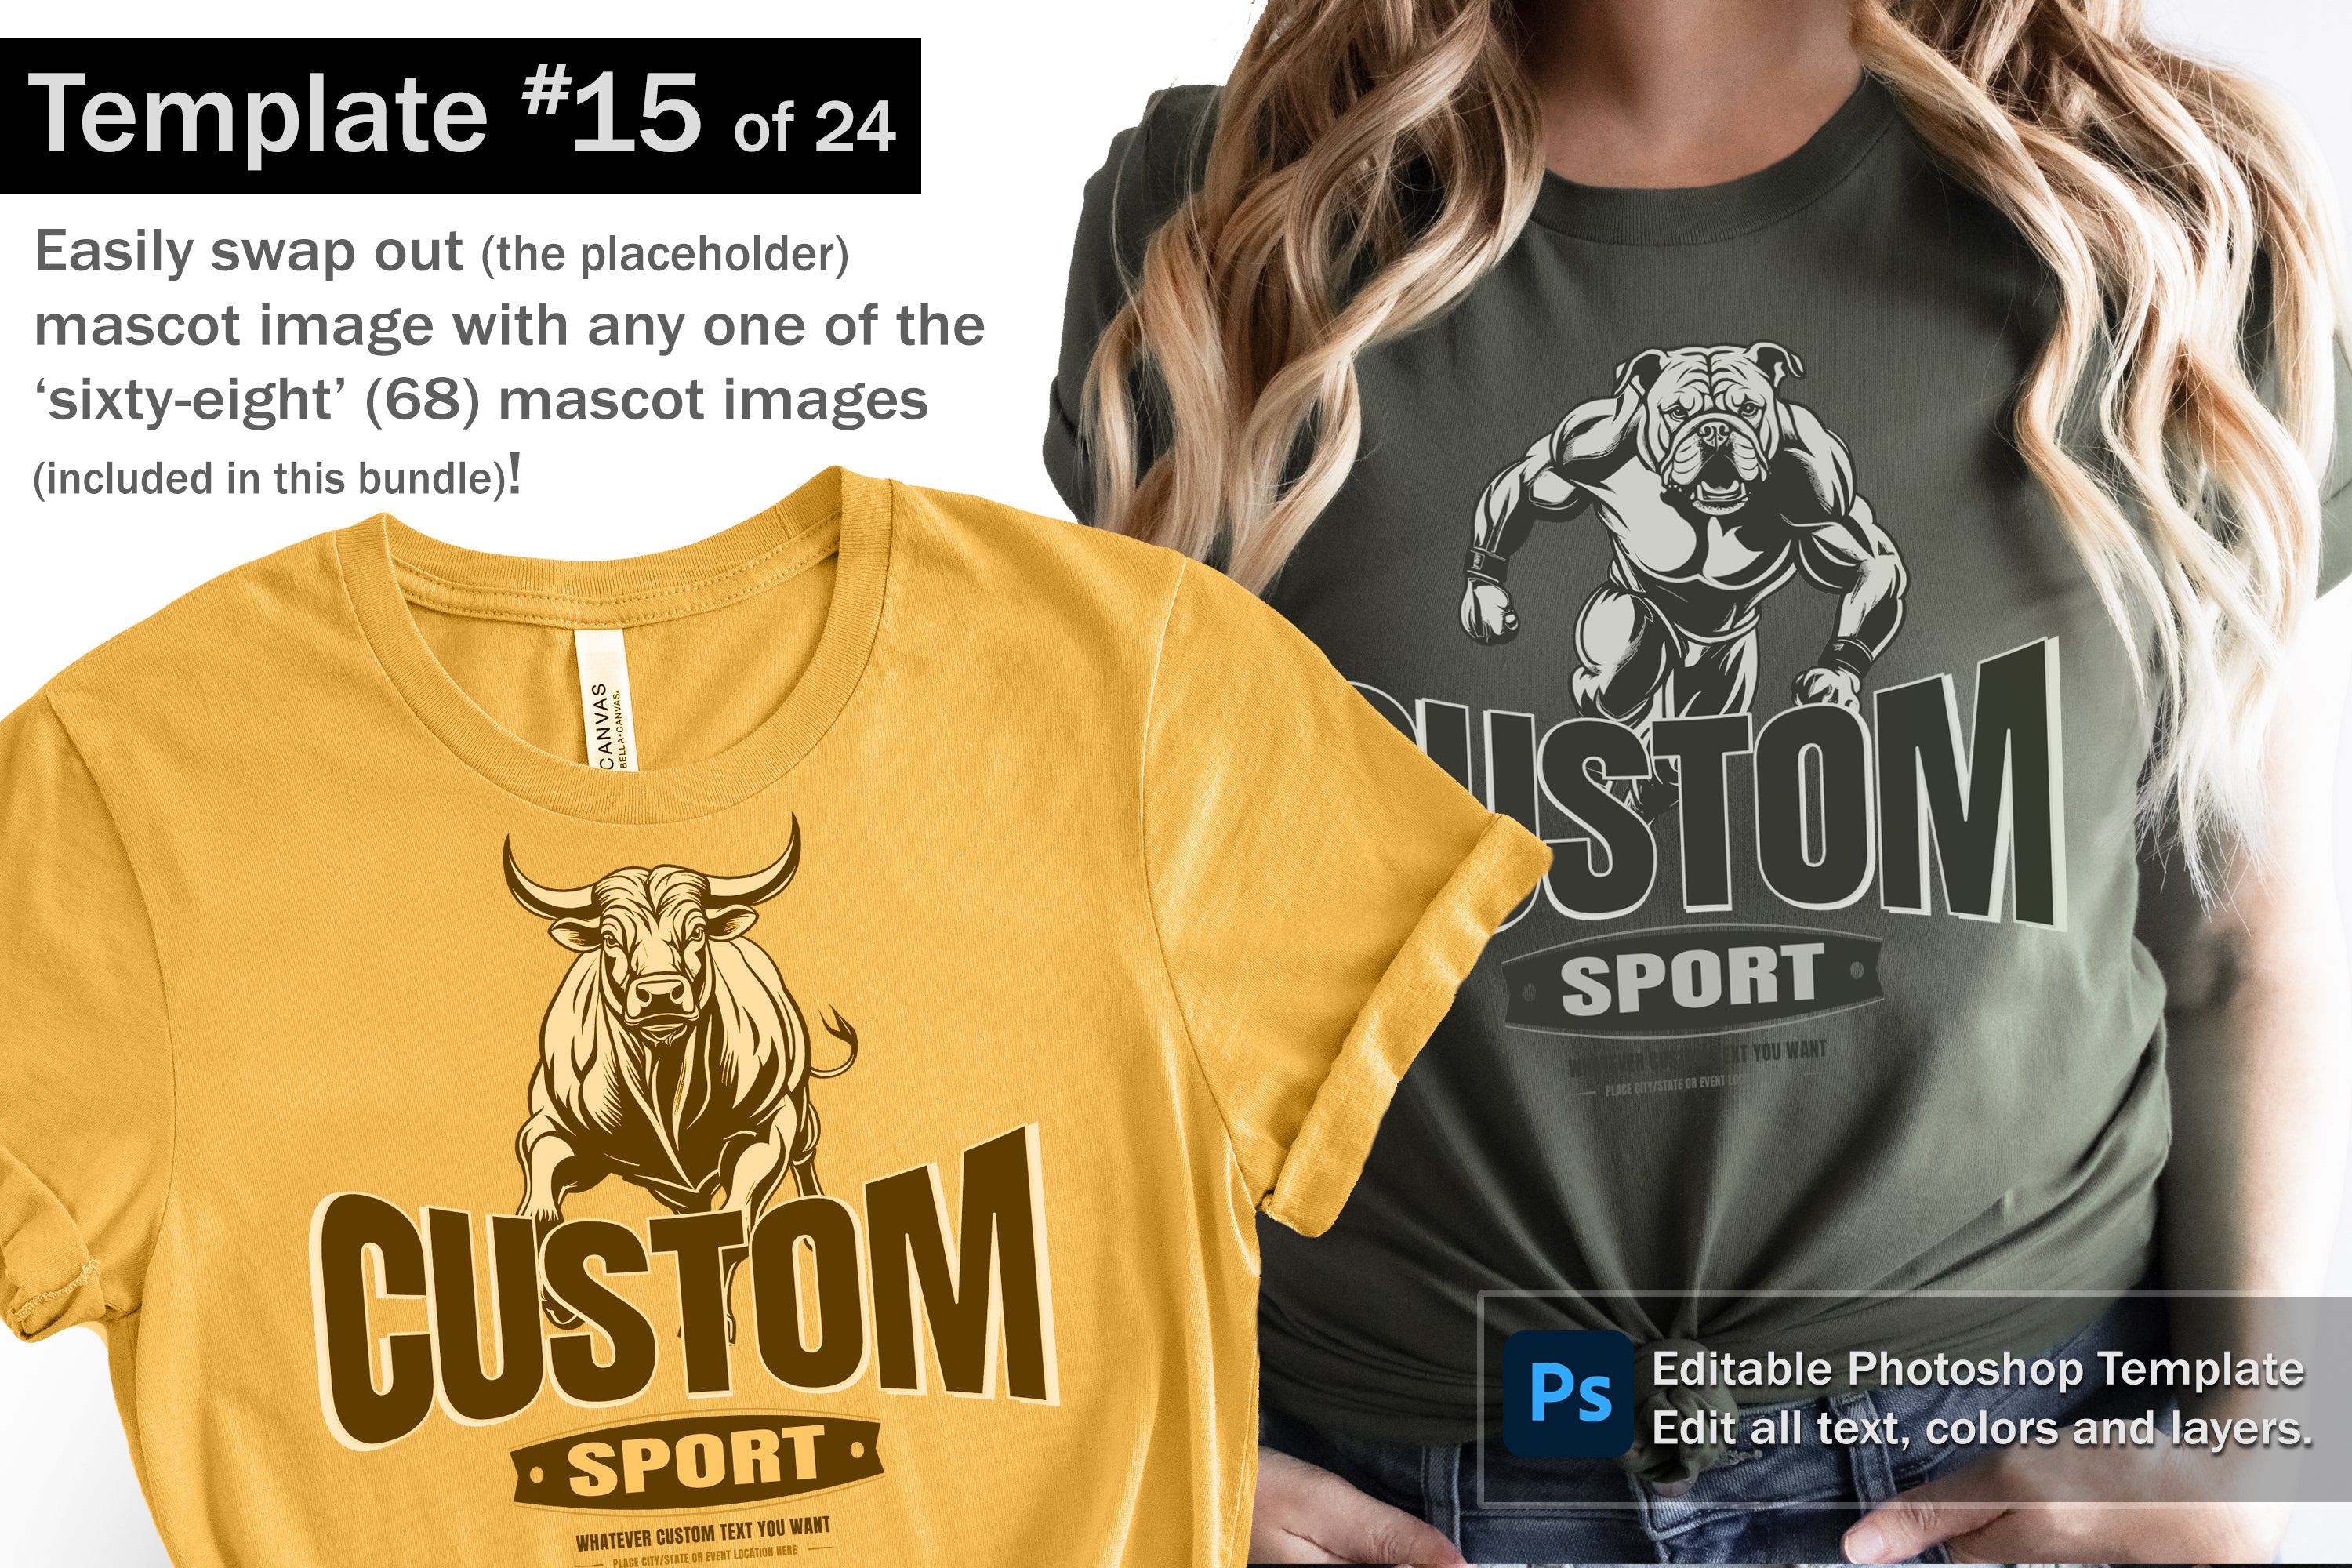 Bull Logo and DIY T-shirt Design Bundle